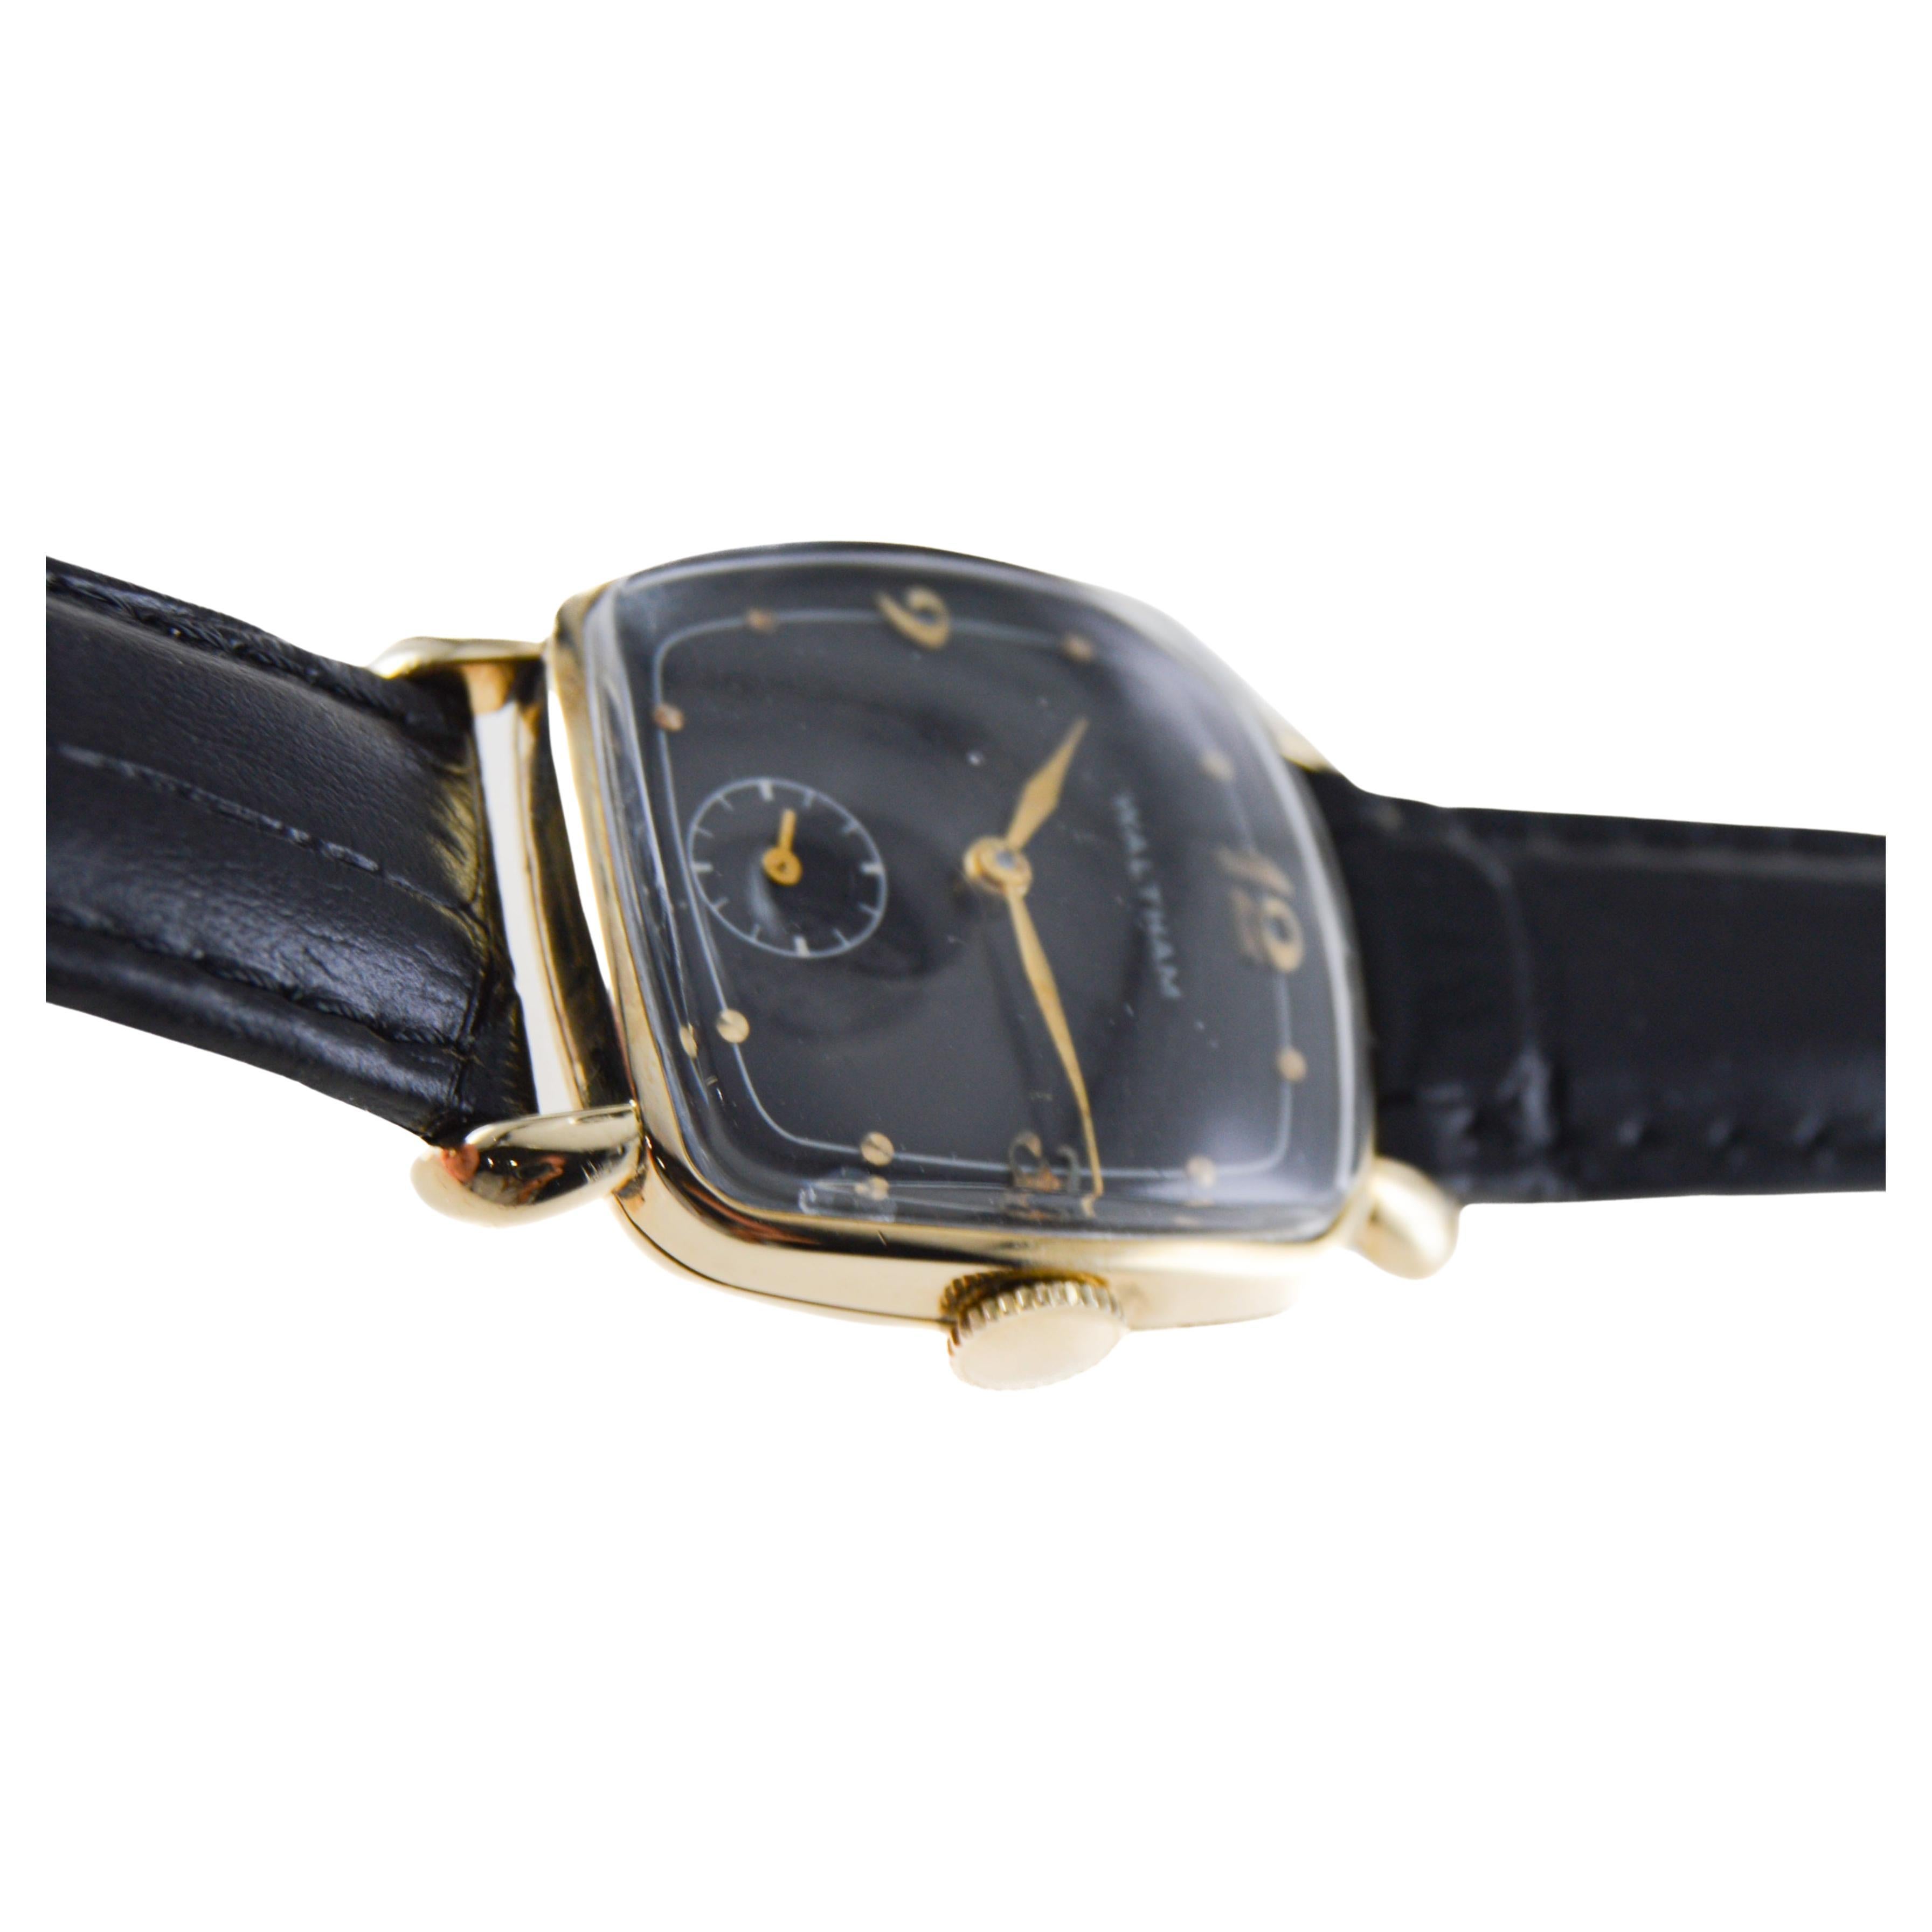 Waltham 14k Art Deco Cushion Shaped Watch with Original Rare Black Dial For Sale 1